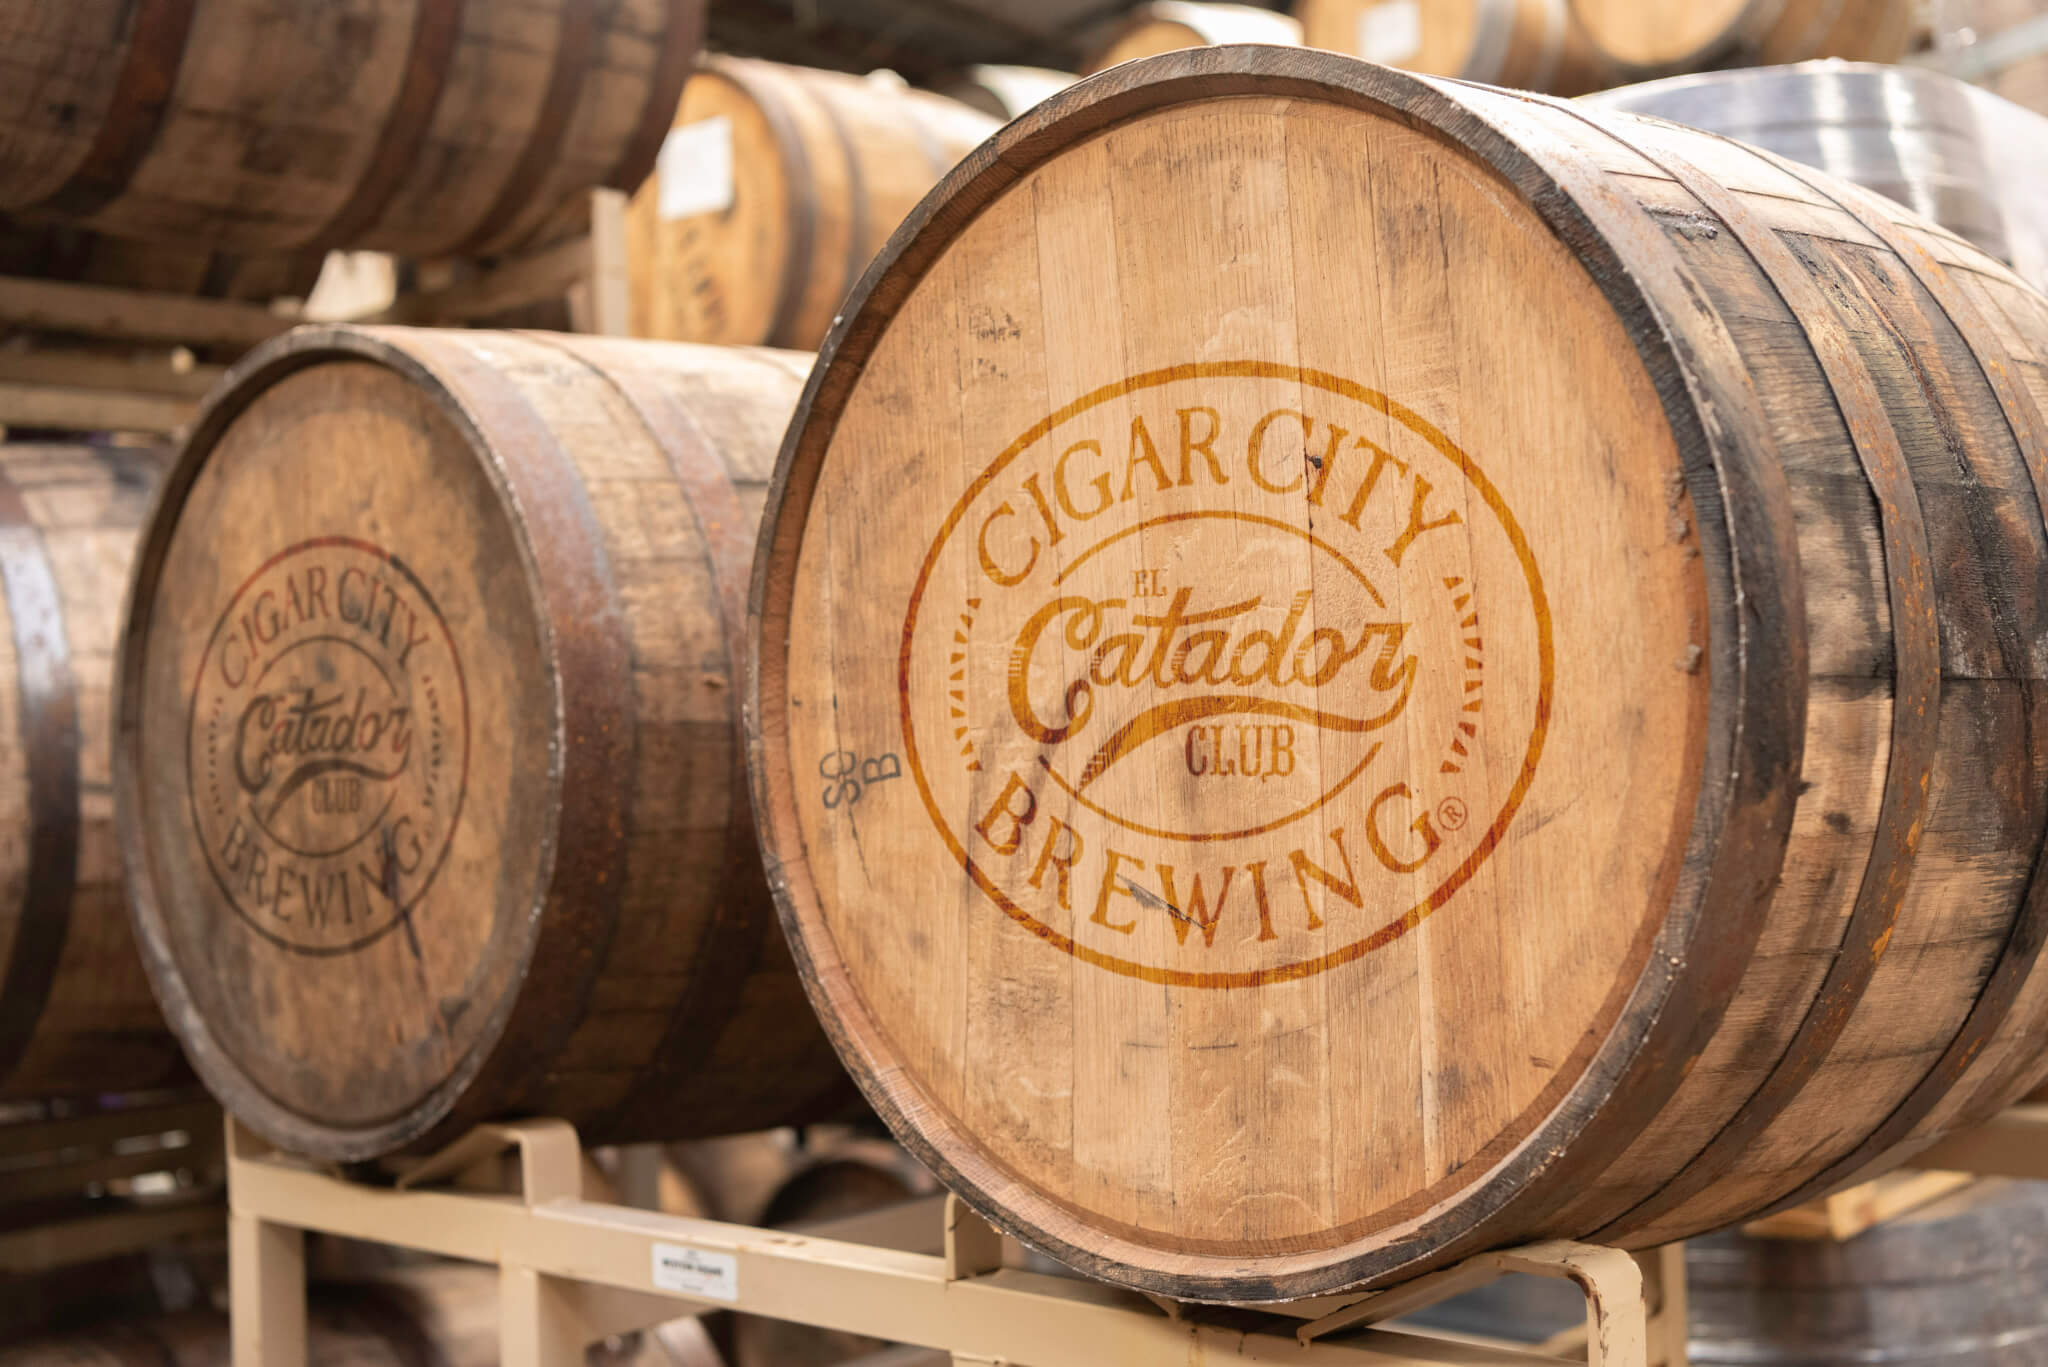 The El Catador Club is Cigar City Brewing's members-only barrel-aged beer club.